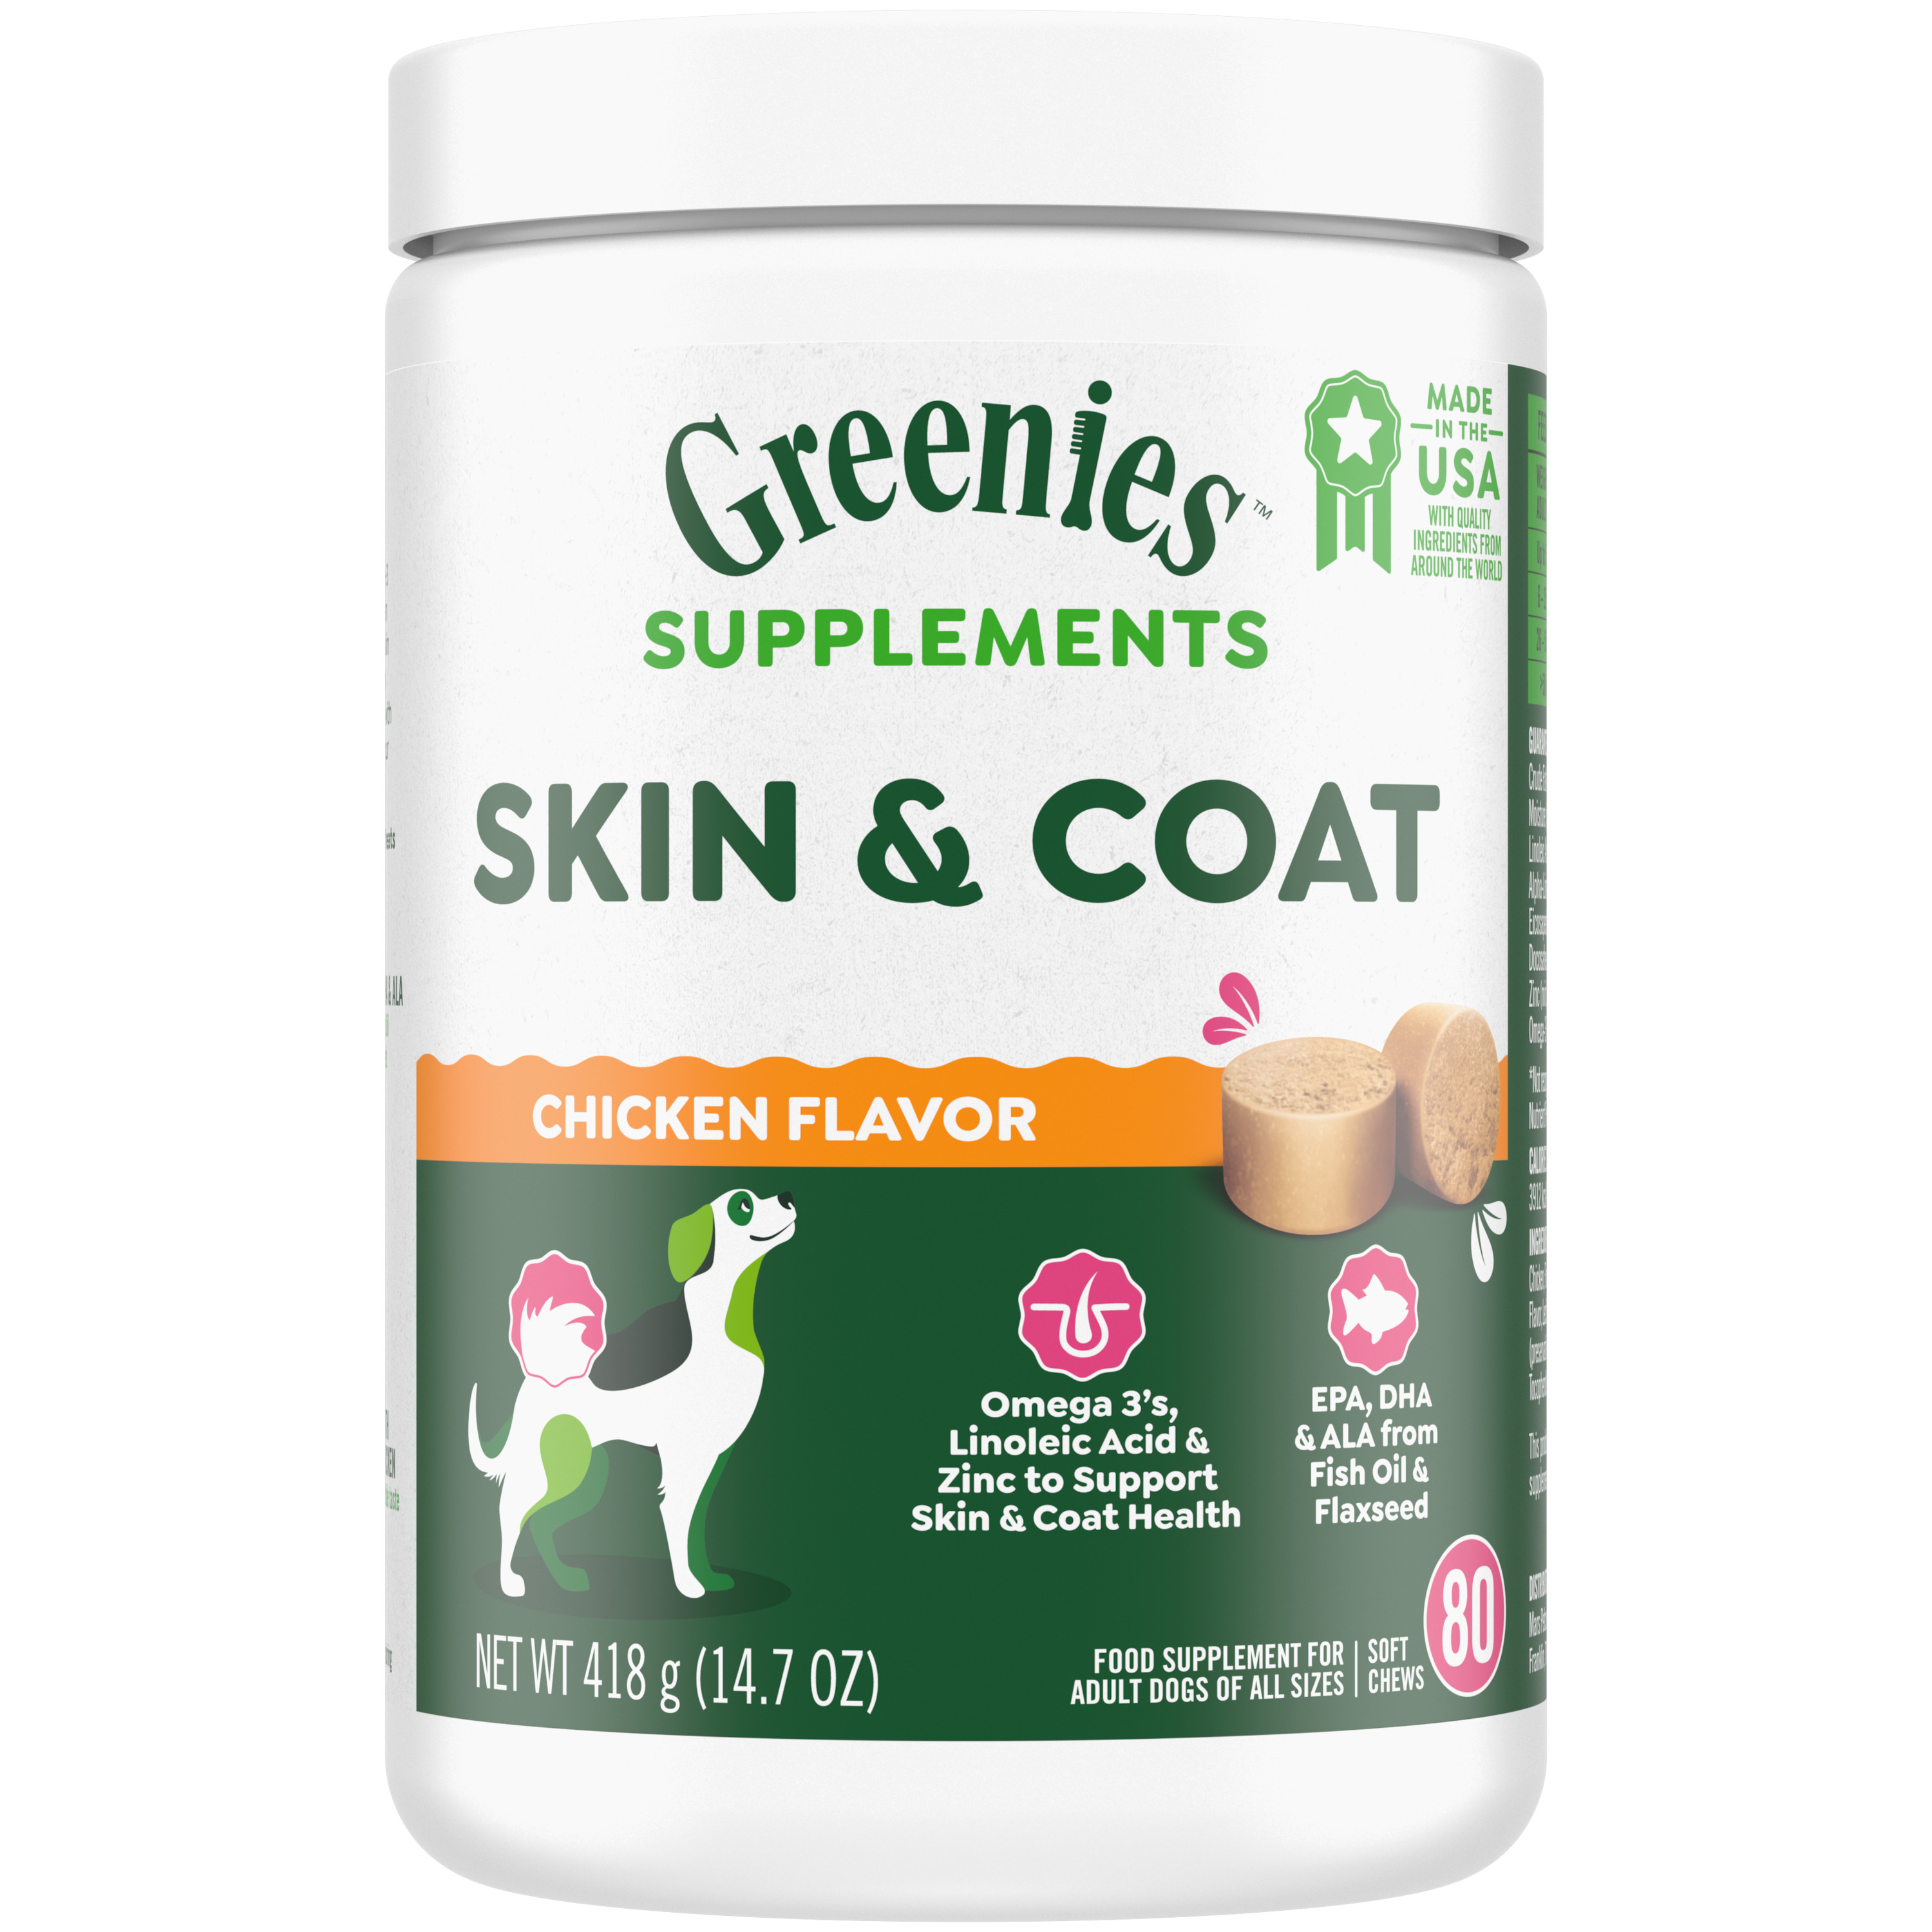 14.7oz Greenies Dog Skin & Coat Supplement - Supplements